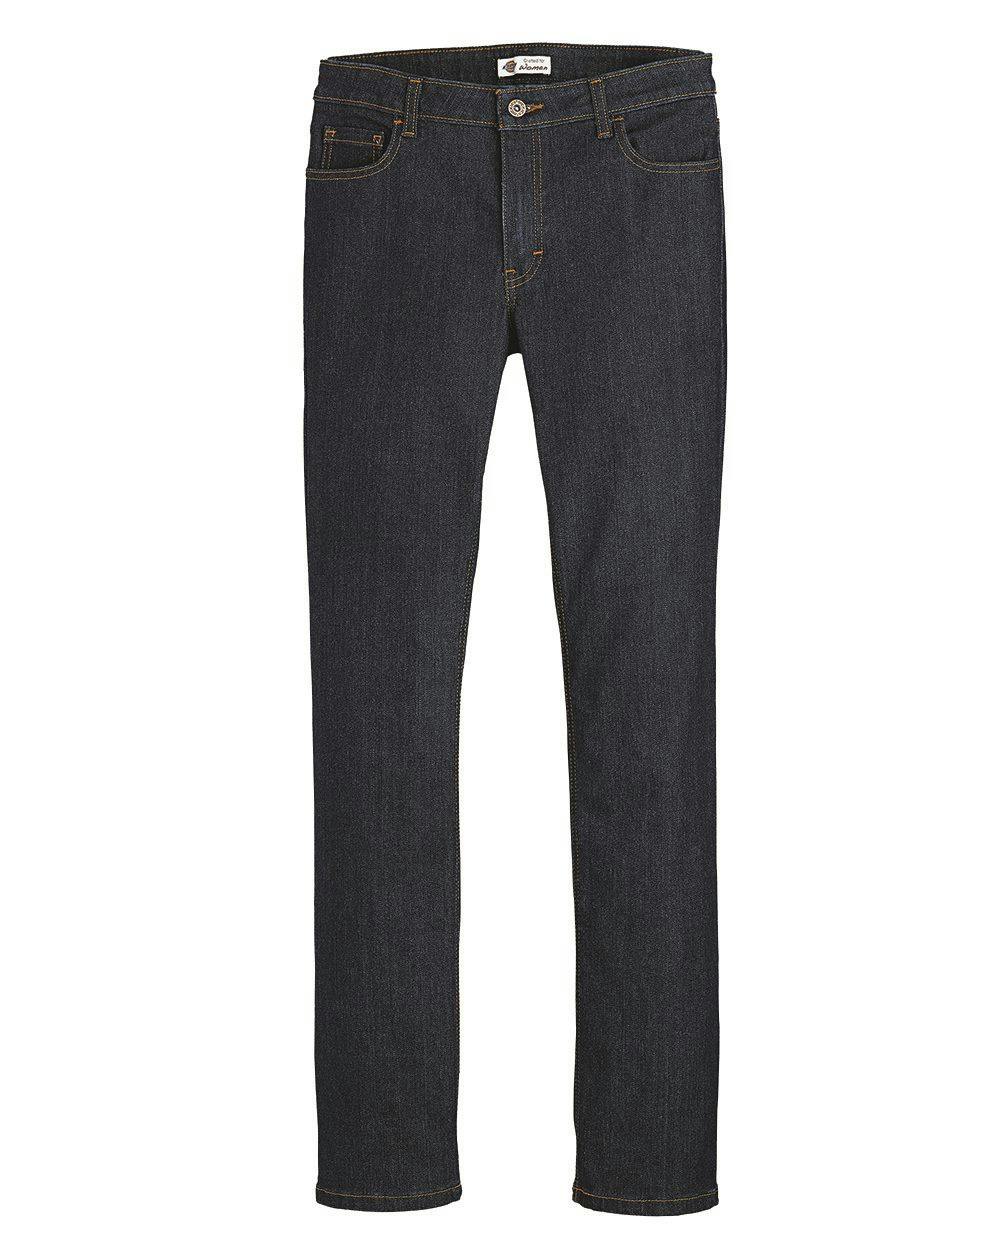 Image for Women's Industrial 32" Inseam 5-Pocket Flex Jeans - FD20